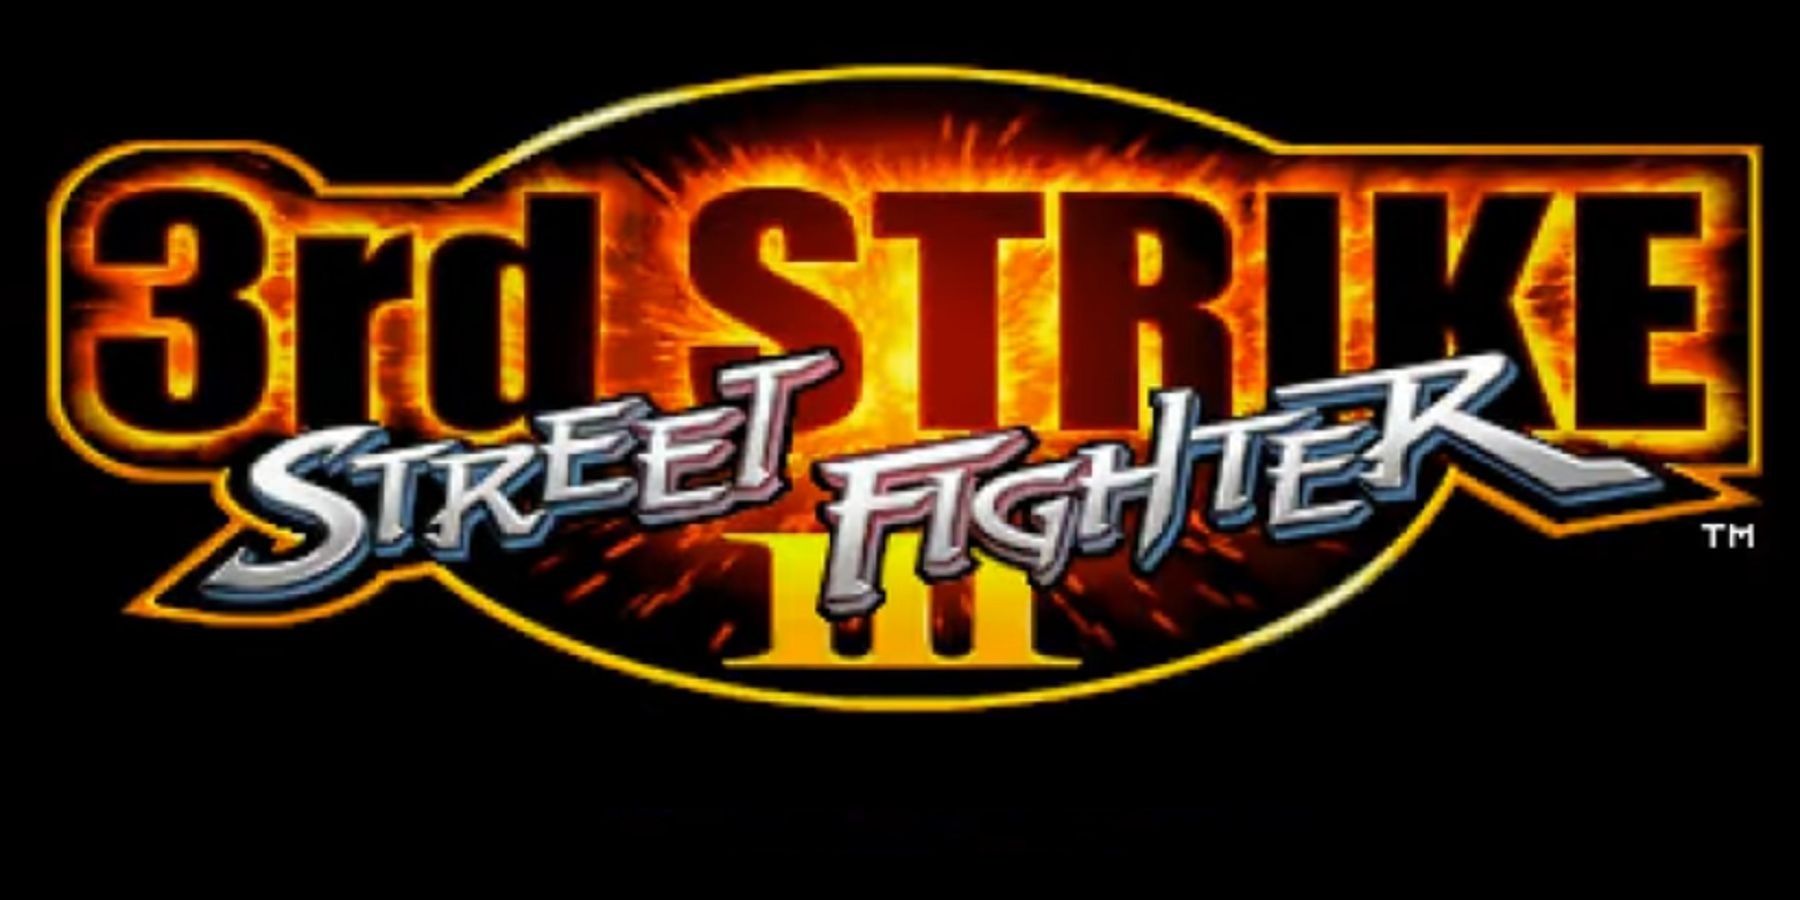 street fighter iii title screen featured